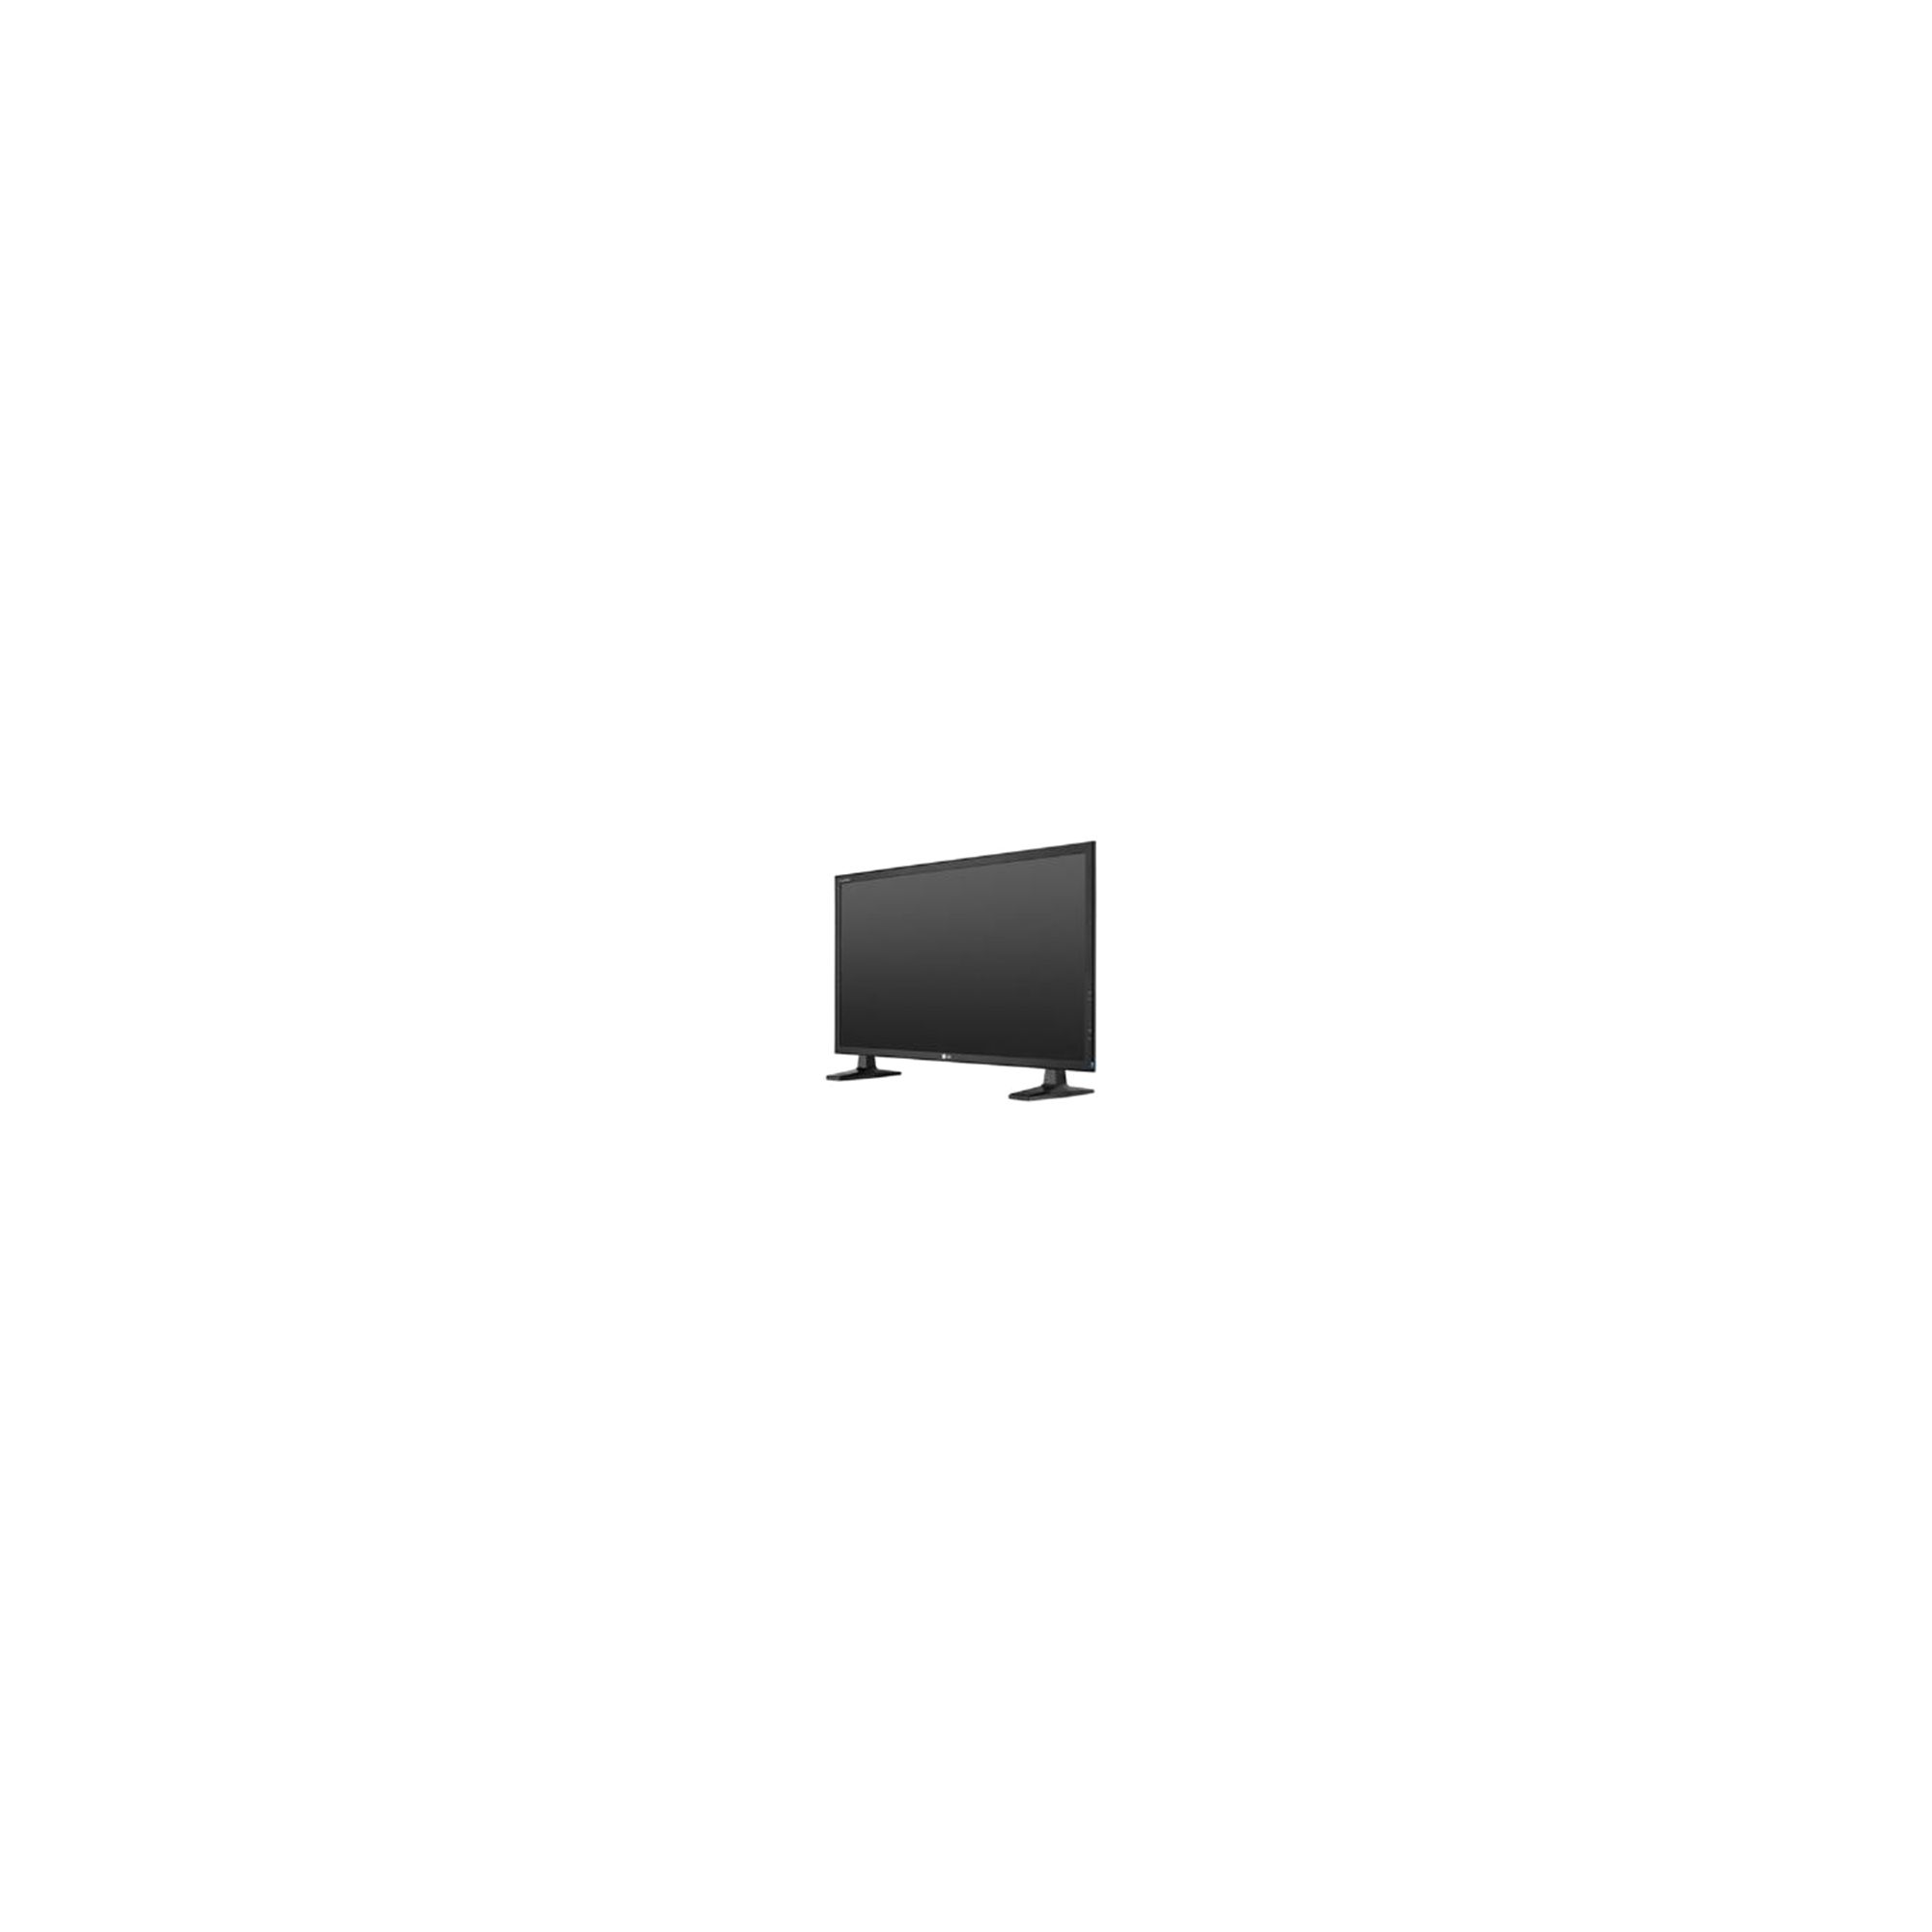 LG – LG 47WS10 47 INCH LED widescreen Full HD monitor IPS panel 450 brightness DVI HDMI optional speakers